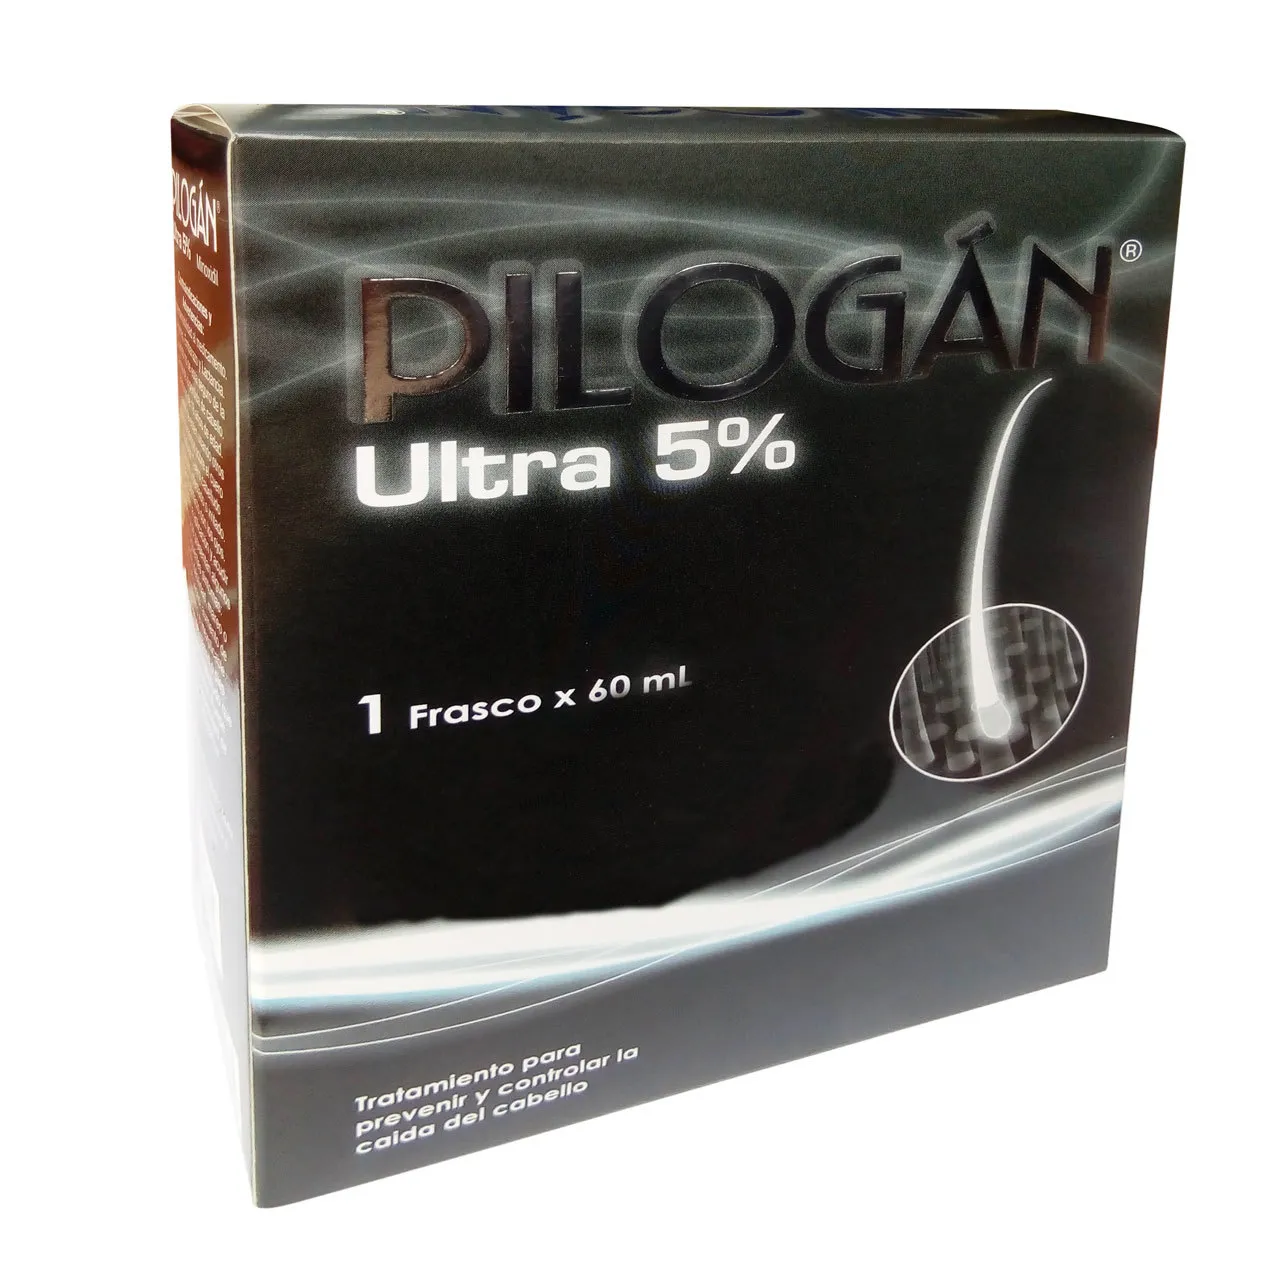 Pilogan Ultra 5% Locion 60 Ml